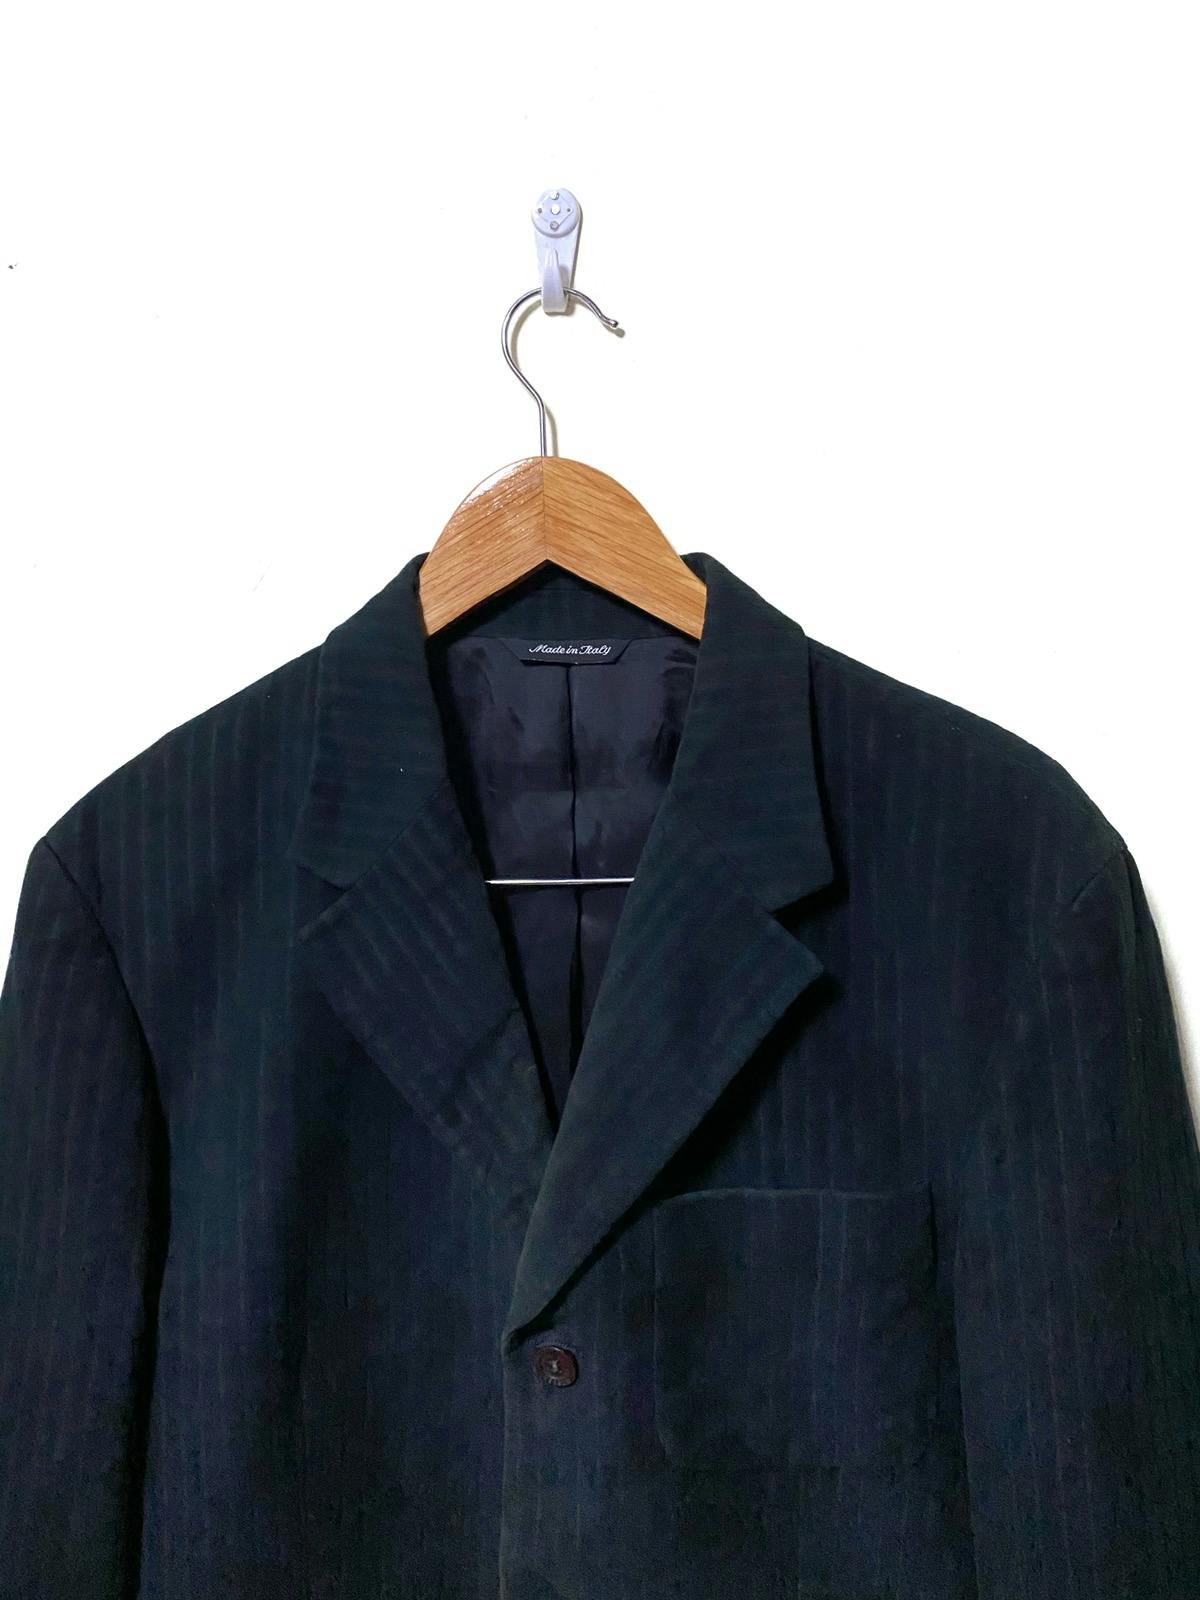 Vintage Versus Gianni Versace Jacket Blazer - 2